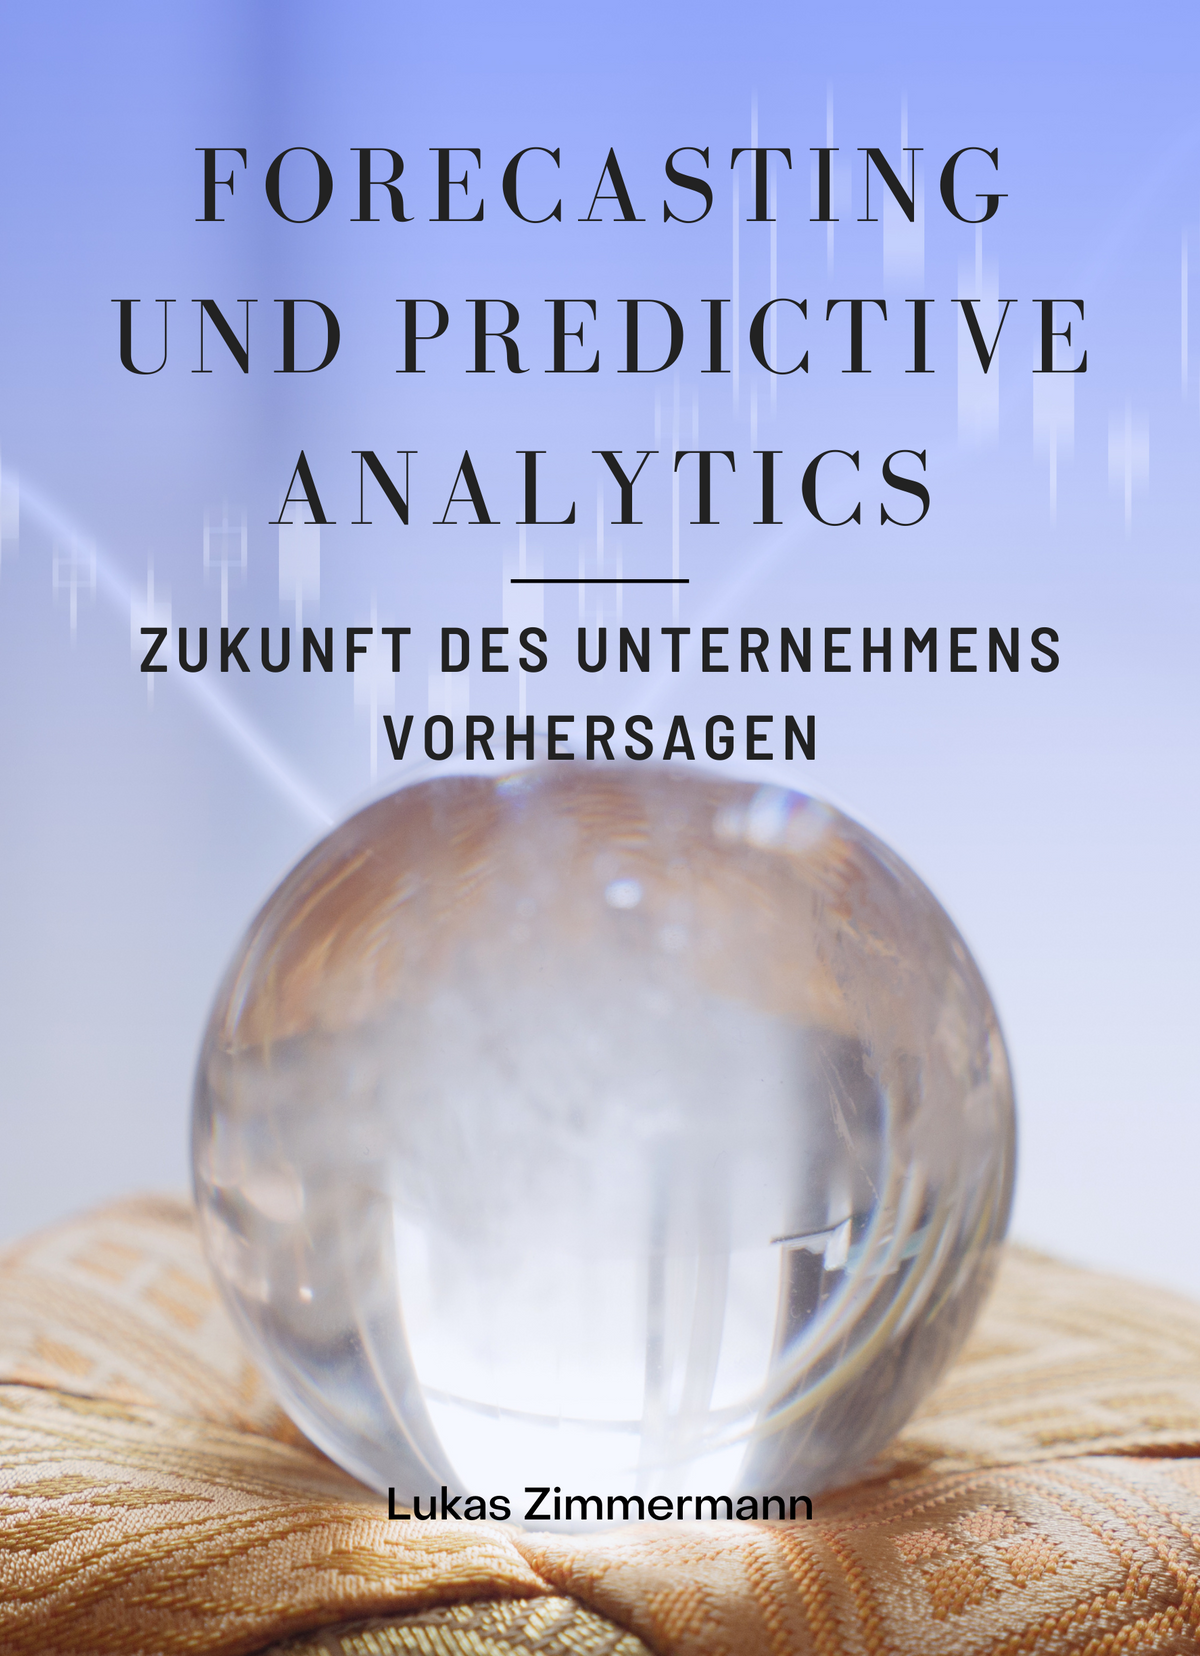 Forecasting und Predictive Analytics